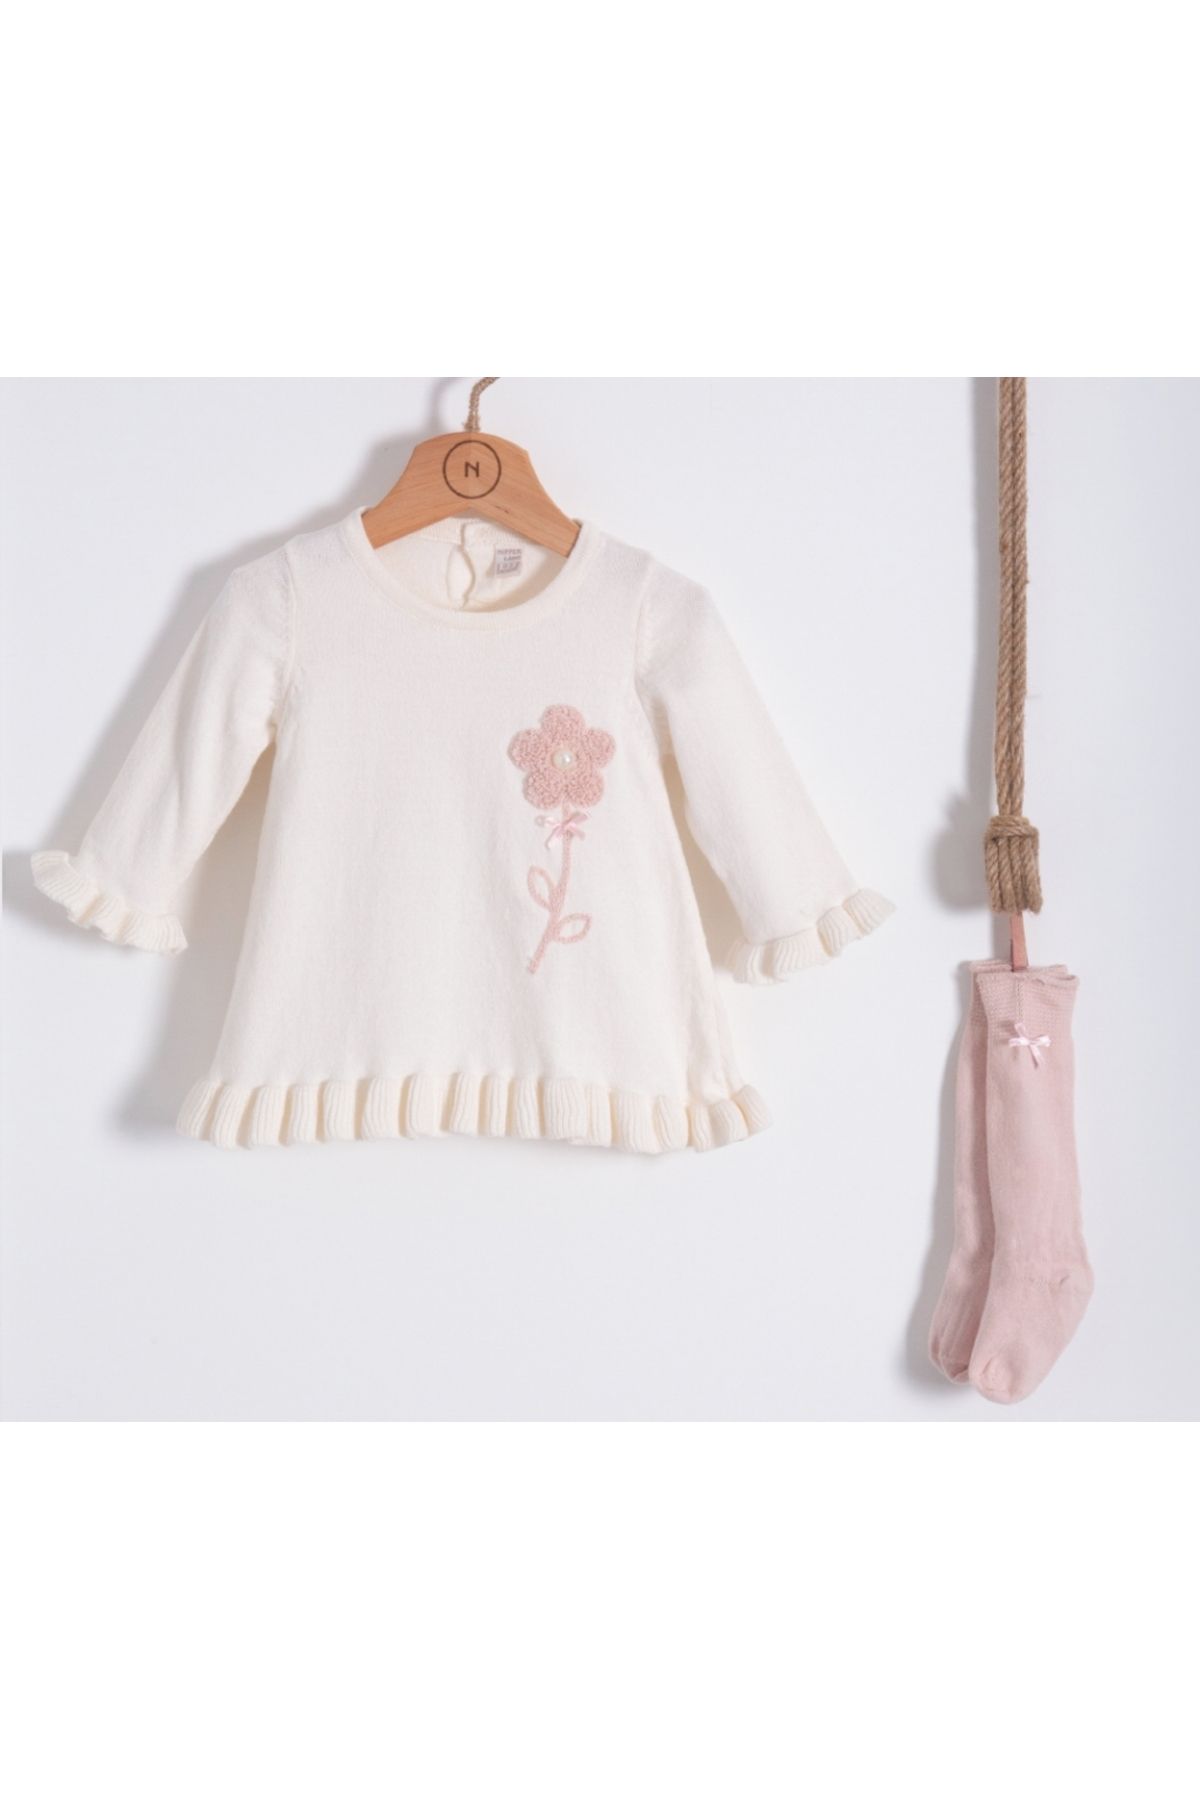 DIDuStore Nipperland Organik Pamuk Koleksiyonu Doğal Kız Bebek Giyim Seti